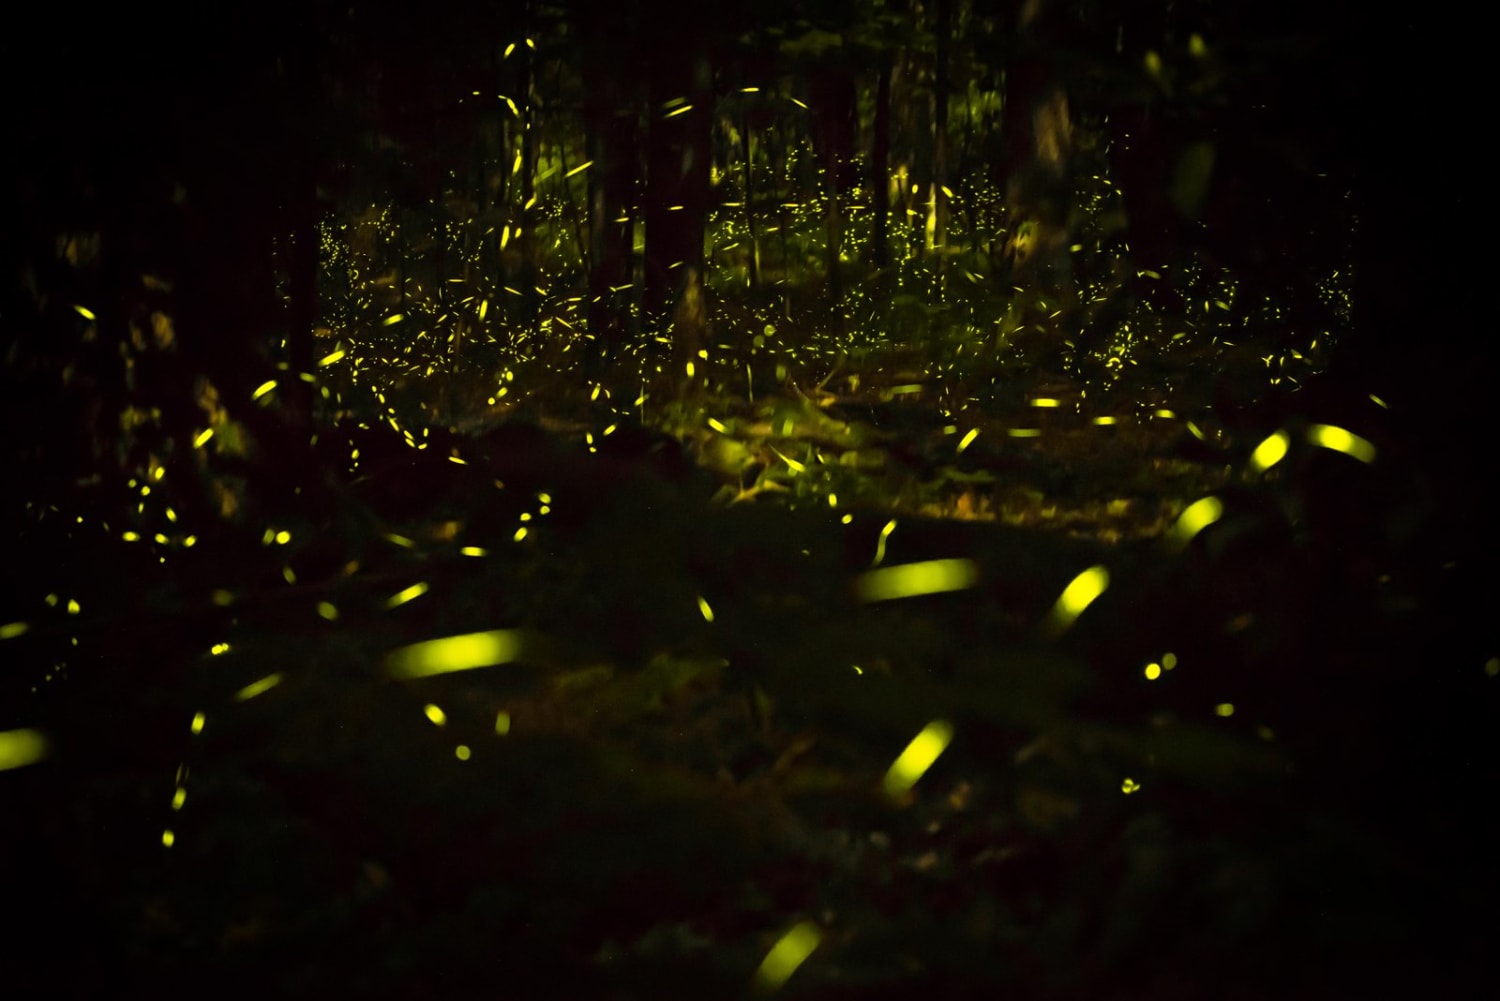 Watch Fireflies Flicker From the Comfort of Home